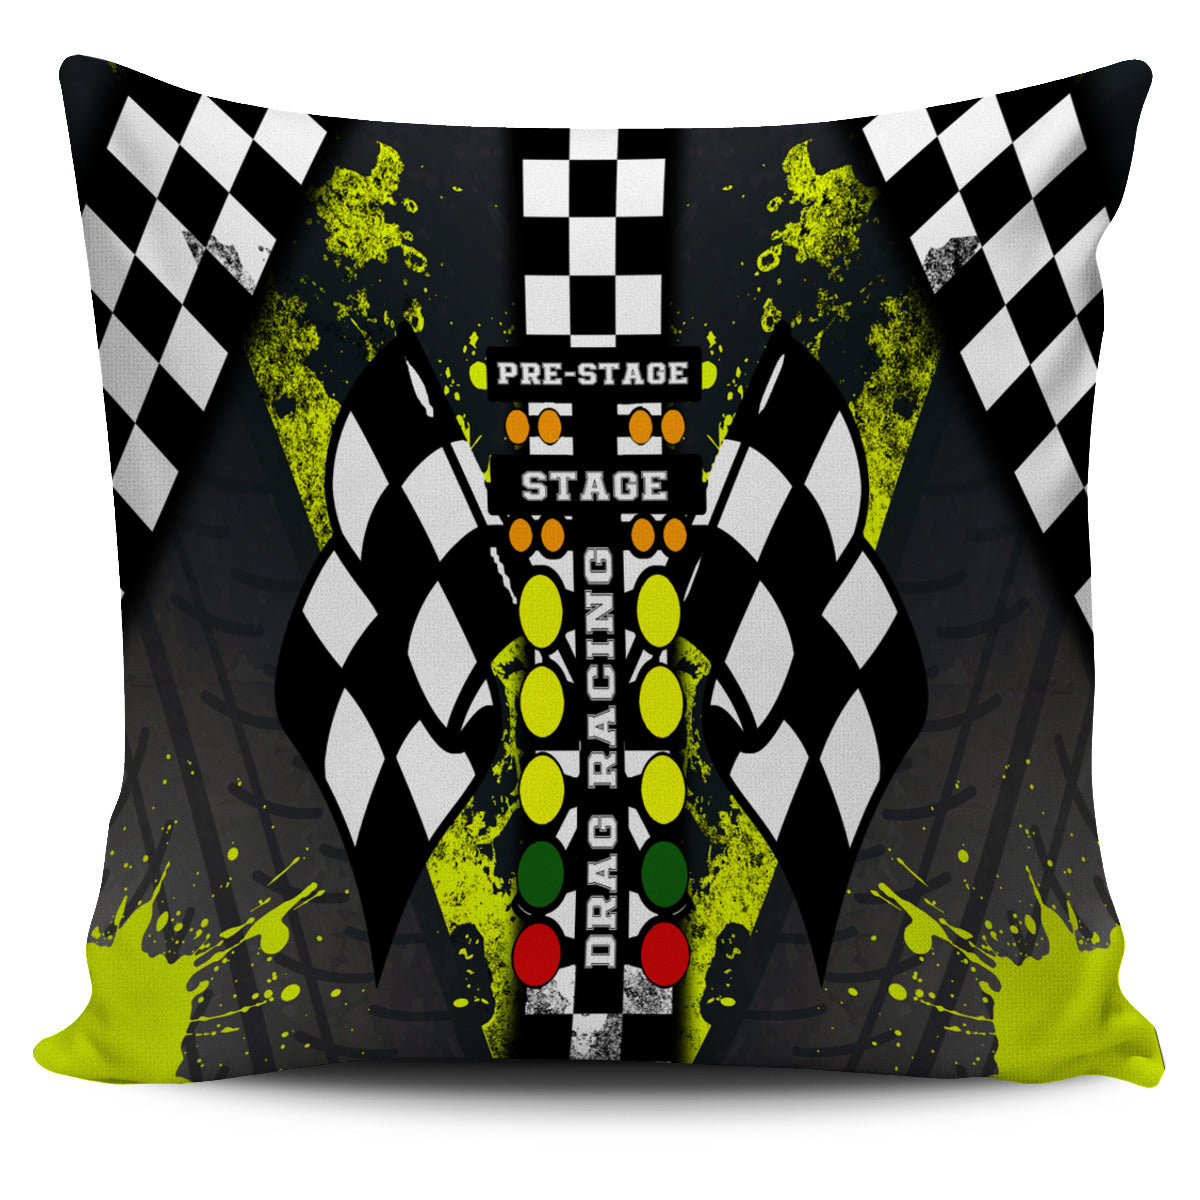 Drag Racing Pillow Cover Yellow